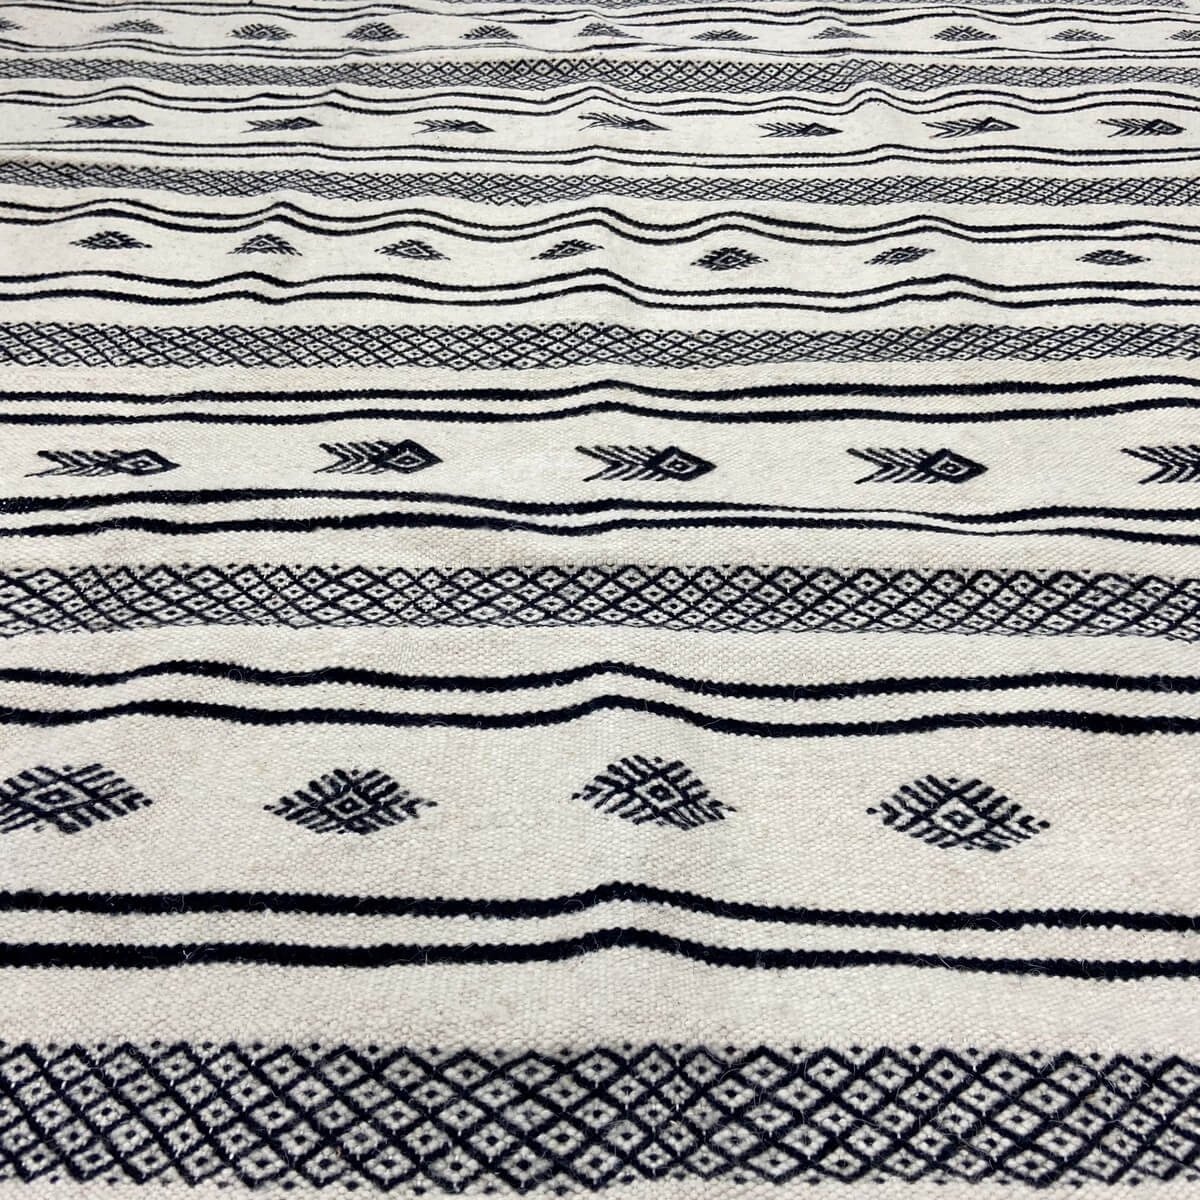 Tapis berbère Tapis Kilim Tizwa 138x255 cm Noir et Blanc (Tissé main, Laine, Tunisie) Tapis kilim tunisien style tapis marocain.